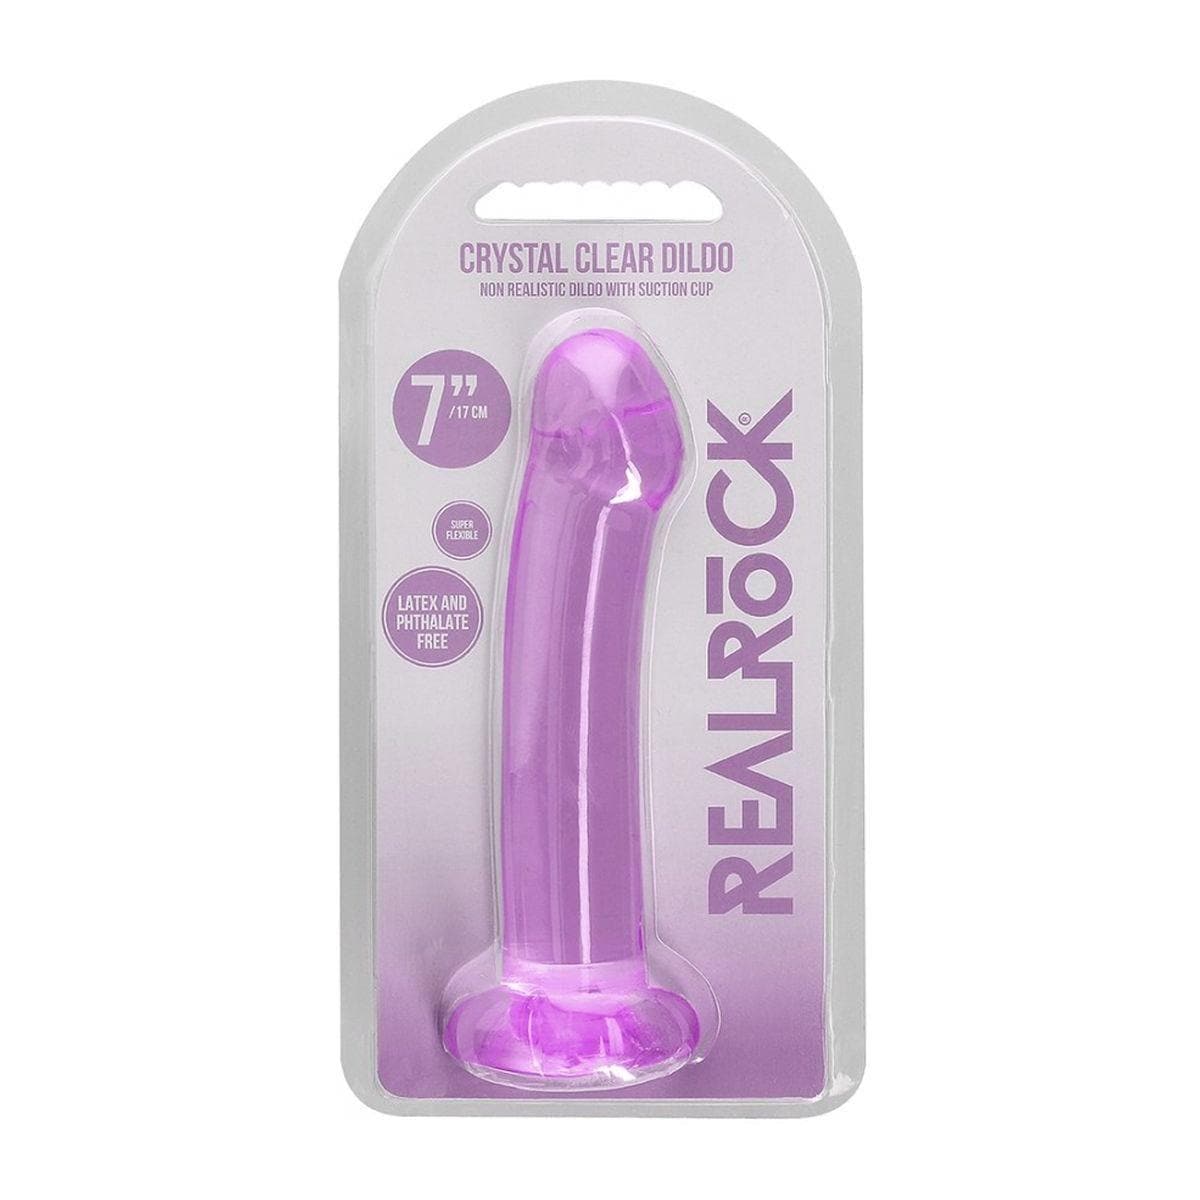 Dildo RealRock Liso Crystal Clear, 17cm Ø3.5cm  RealRock   